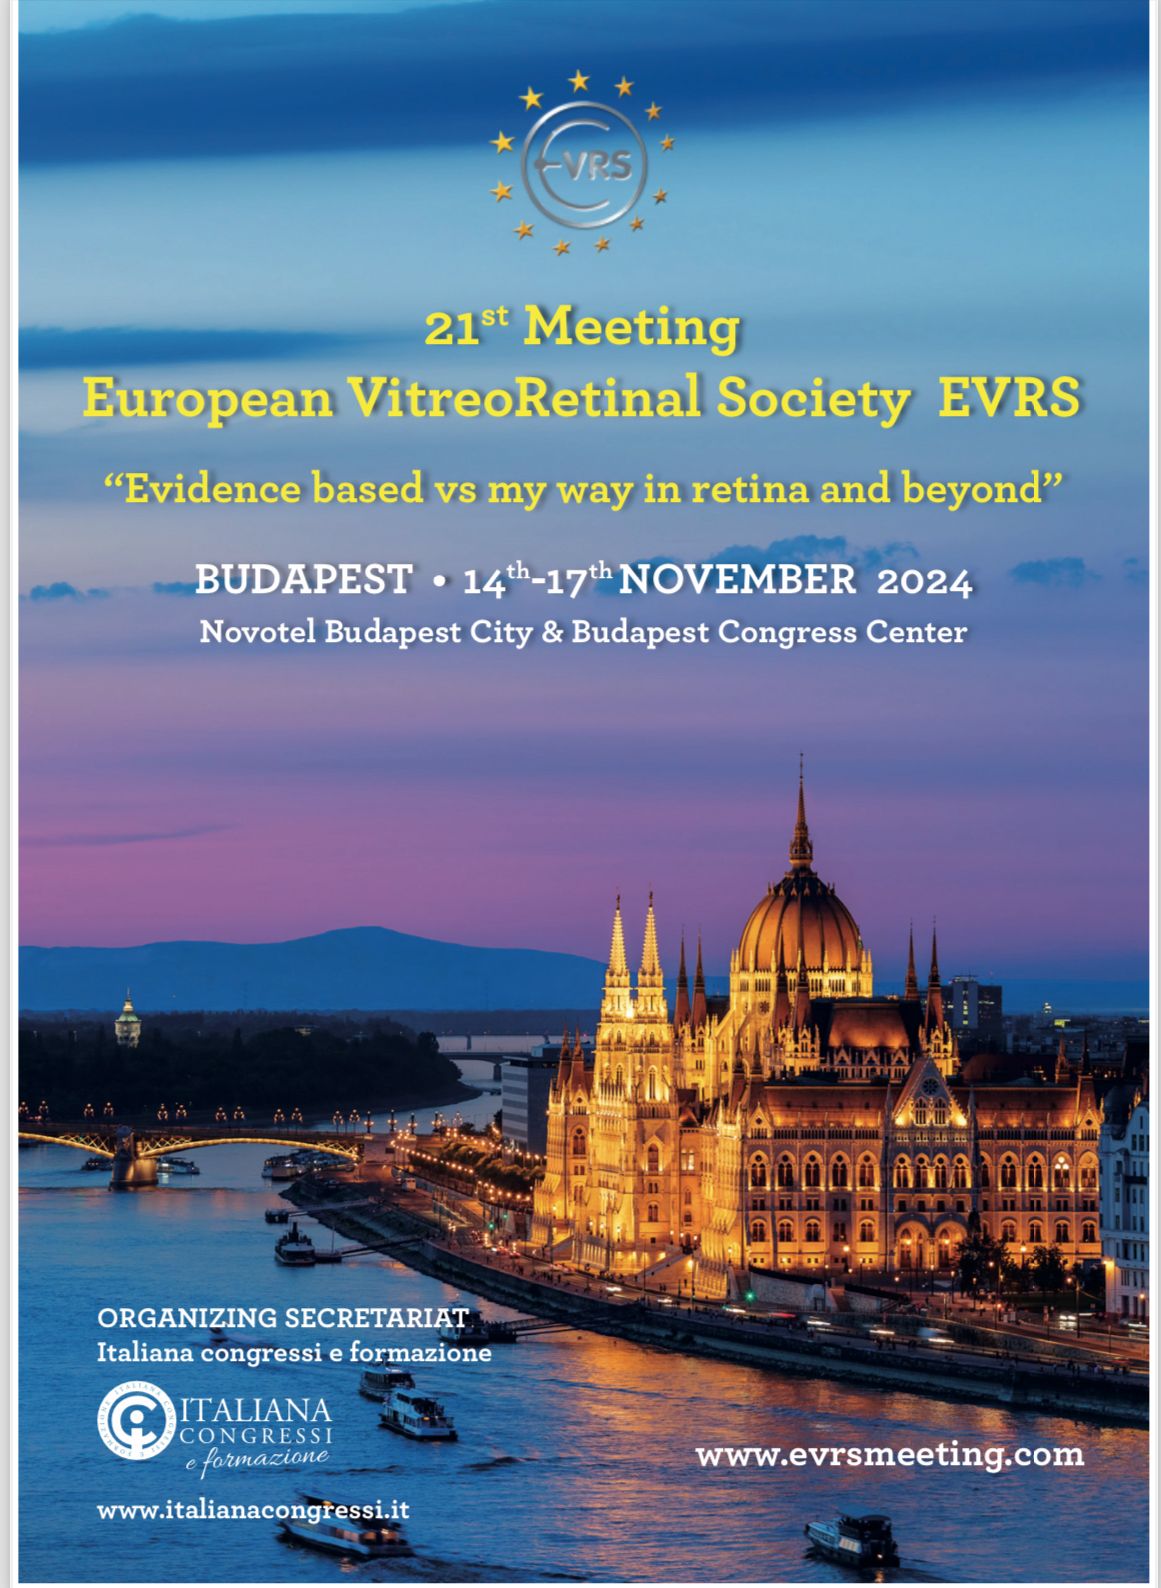 European VitreoRetinal Society EVRS